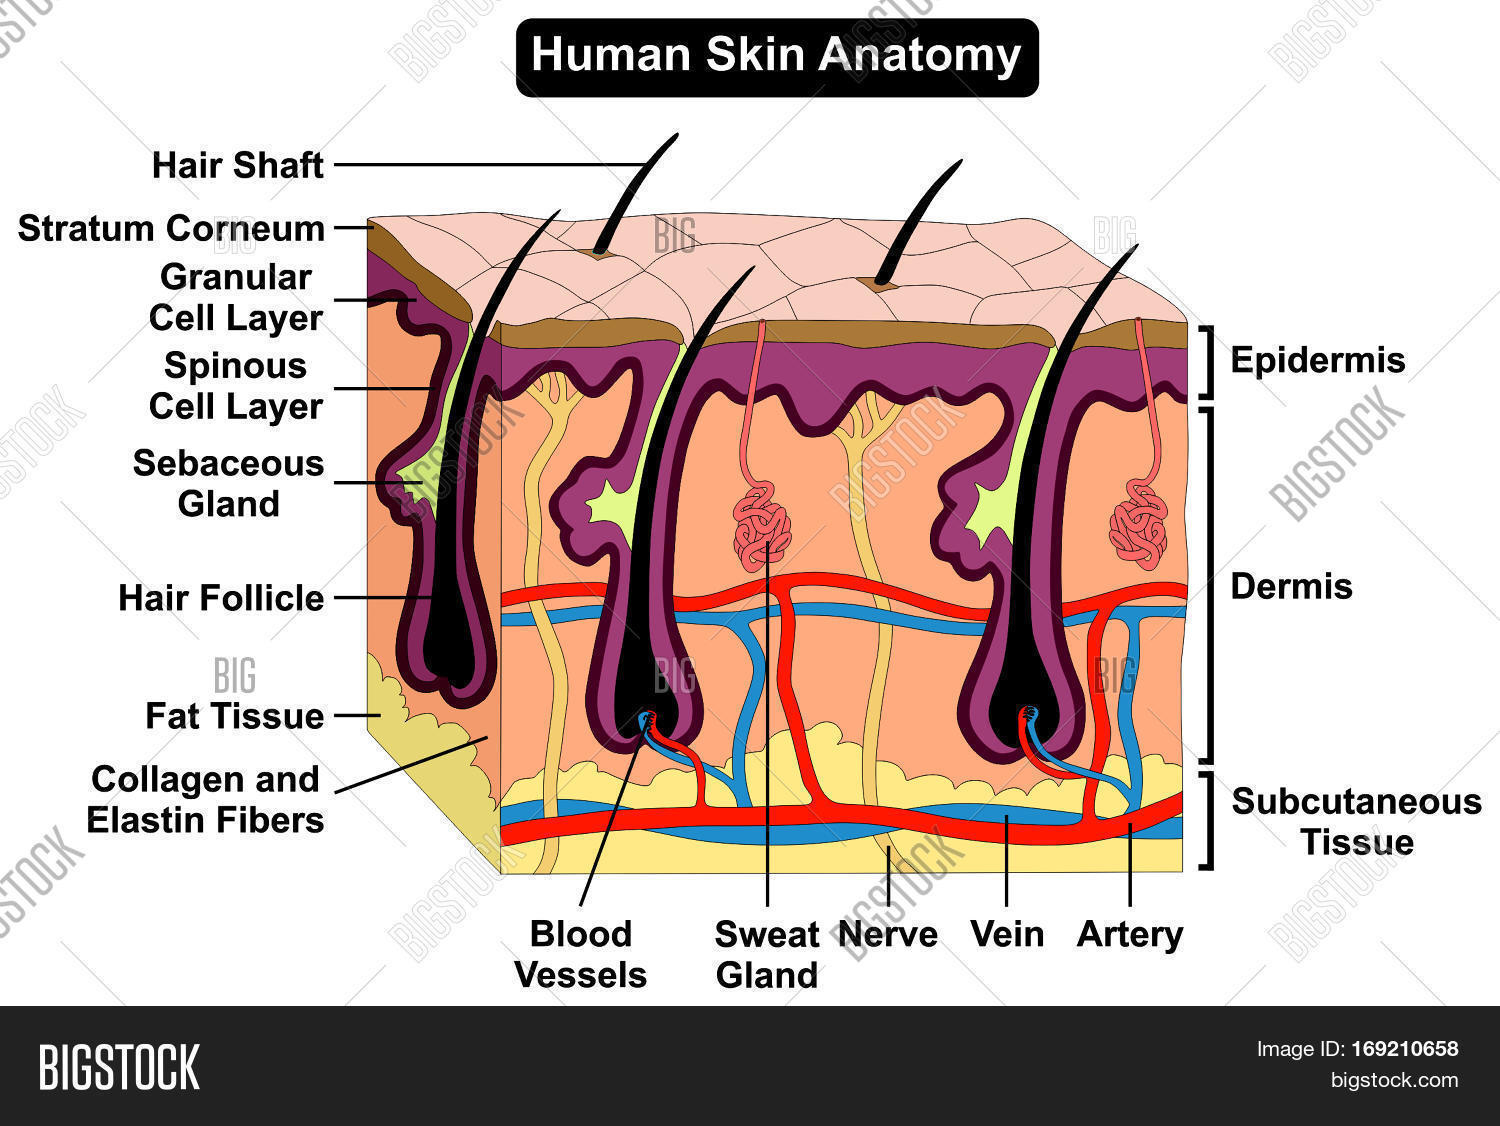 Human Skin Diagram Human Skin Anatomy Image Photo Free Trial Bigstock